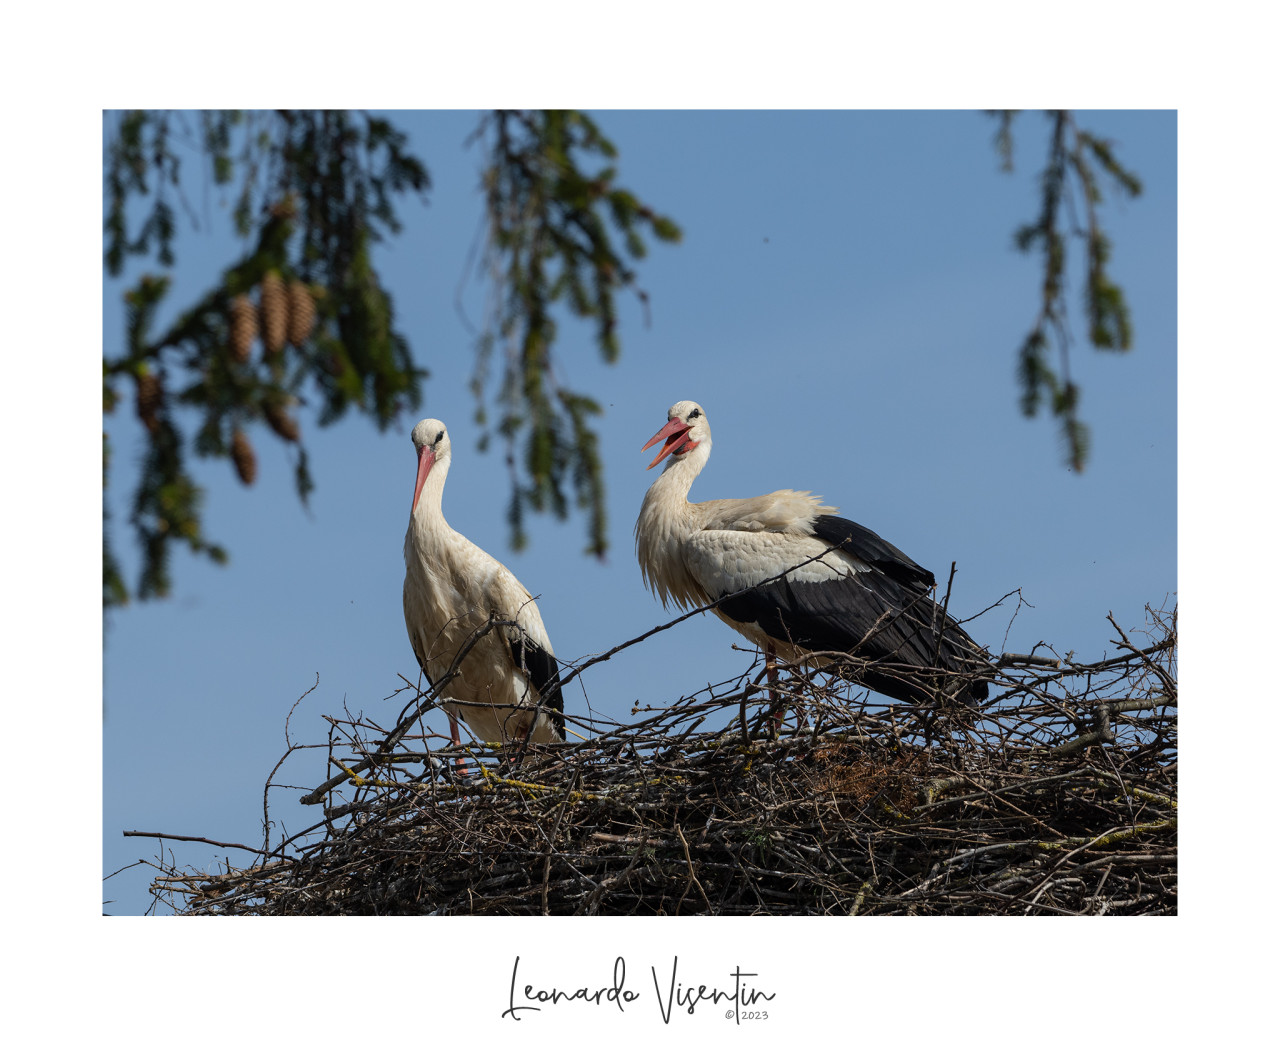 Cicogne bianche al nido